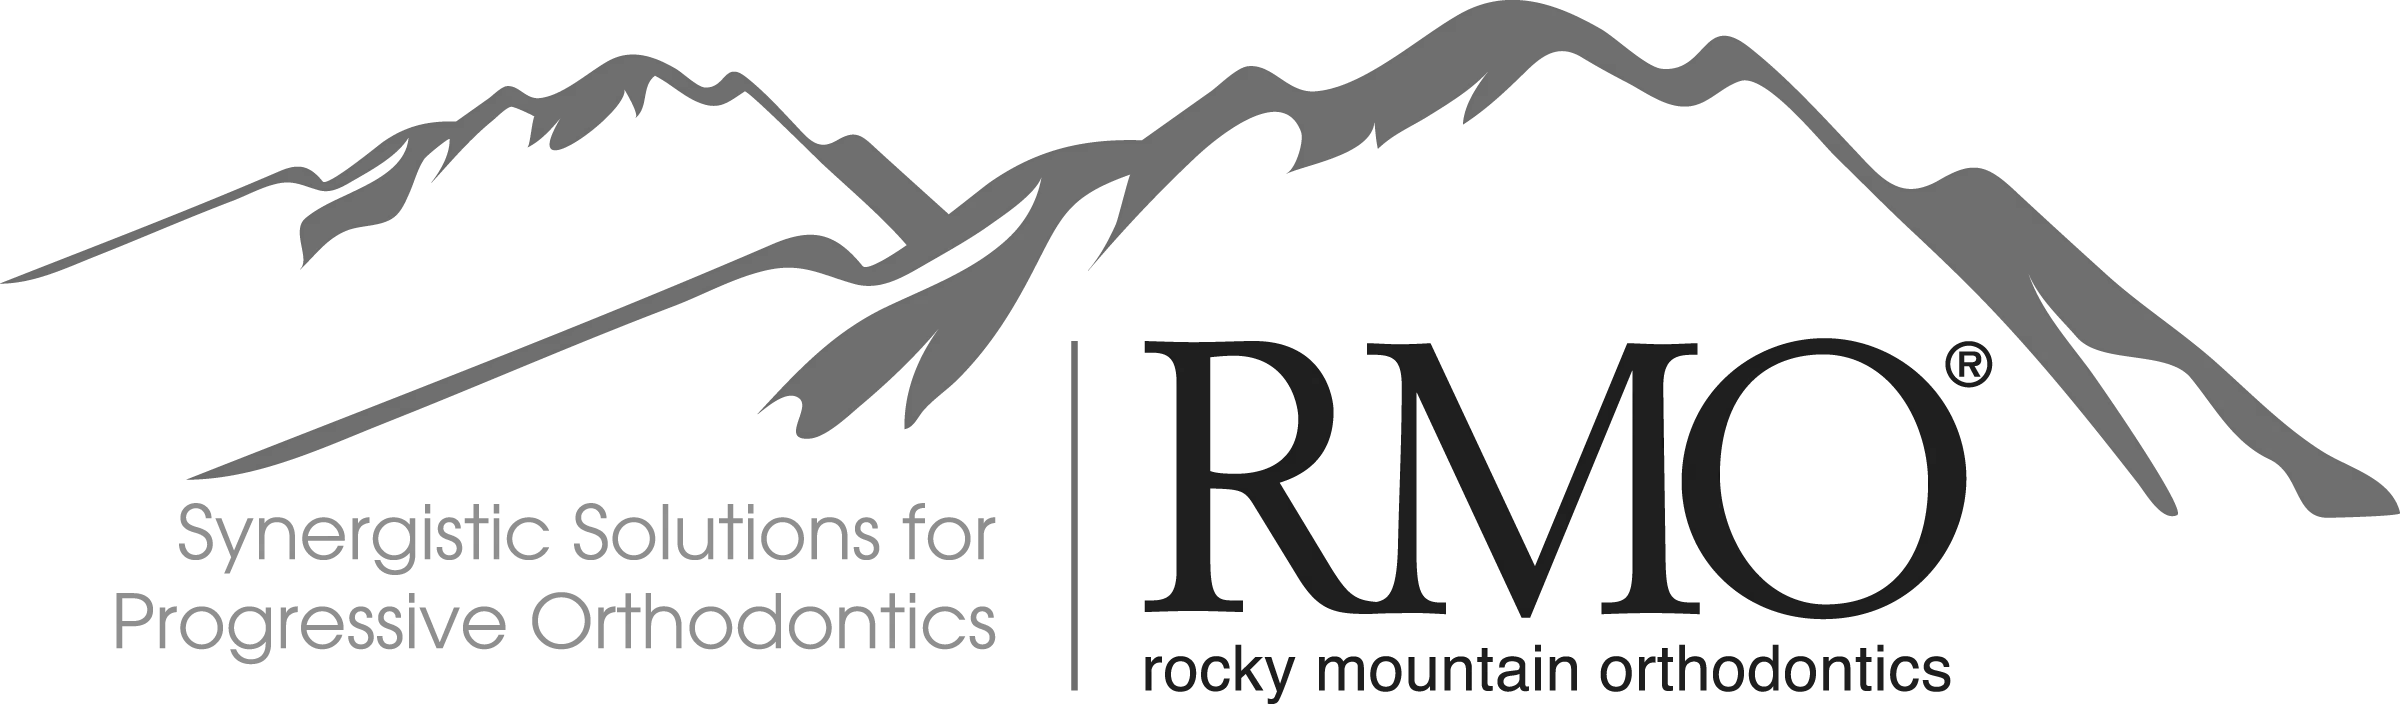 RMO-Slogan-Logo-300dpi-modified